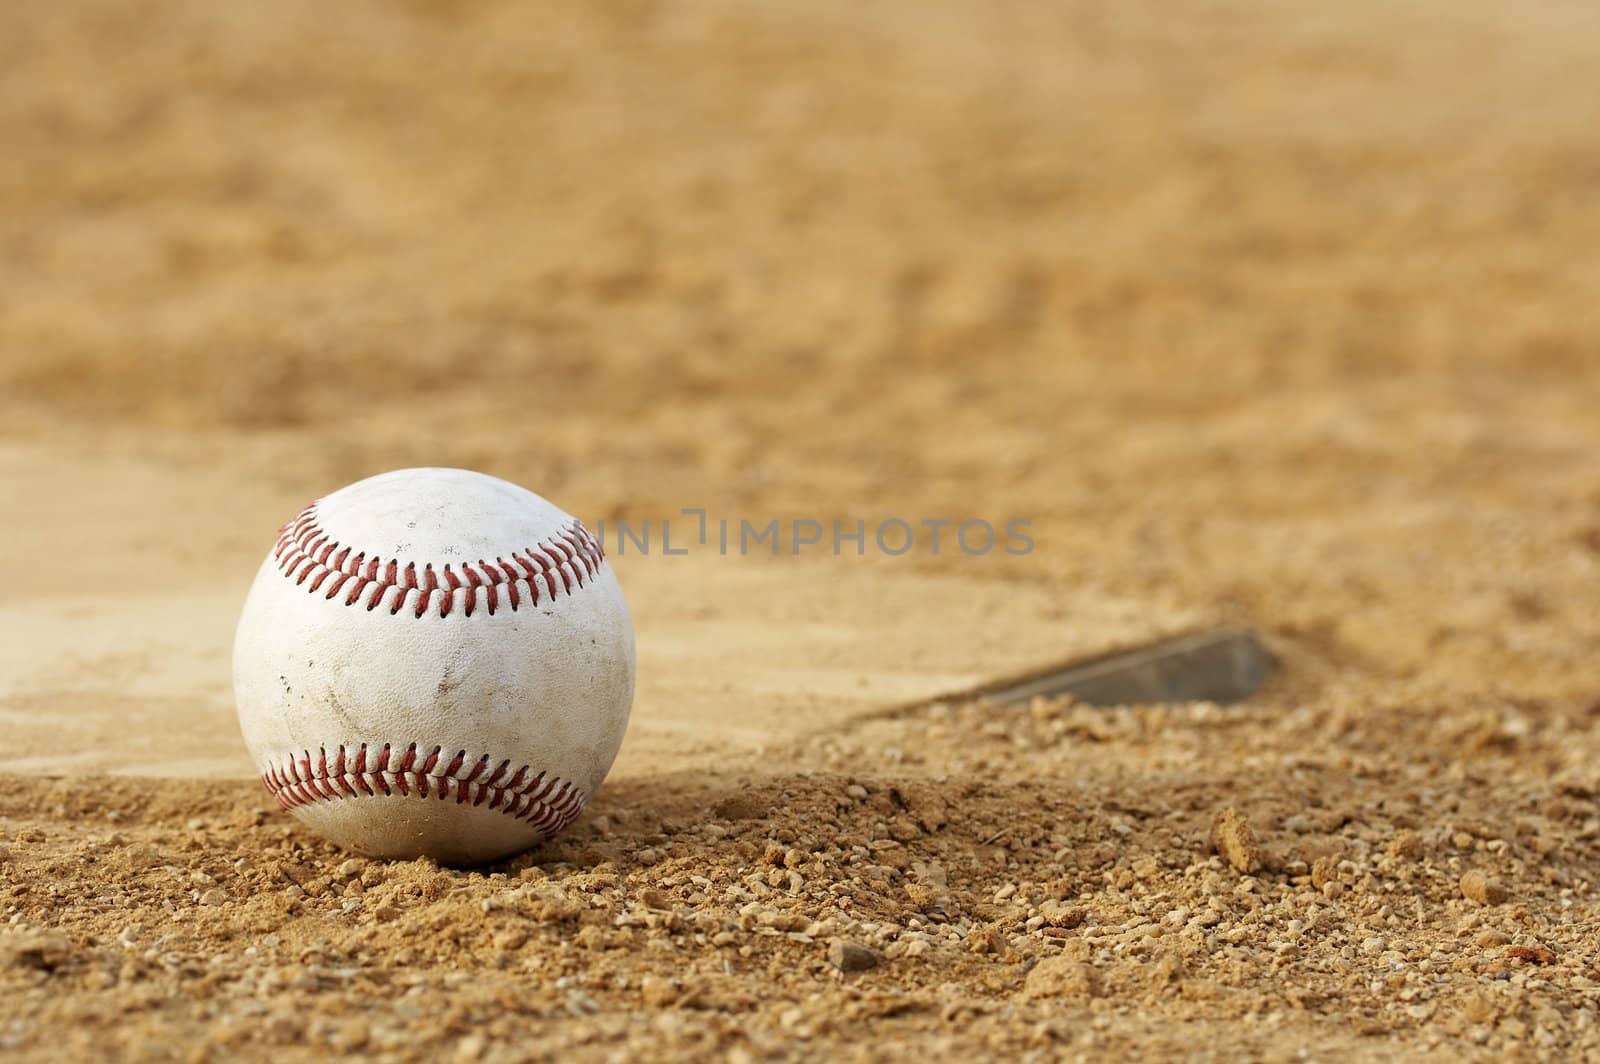 baseball in dirt by gjdisplay